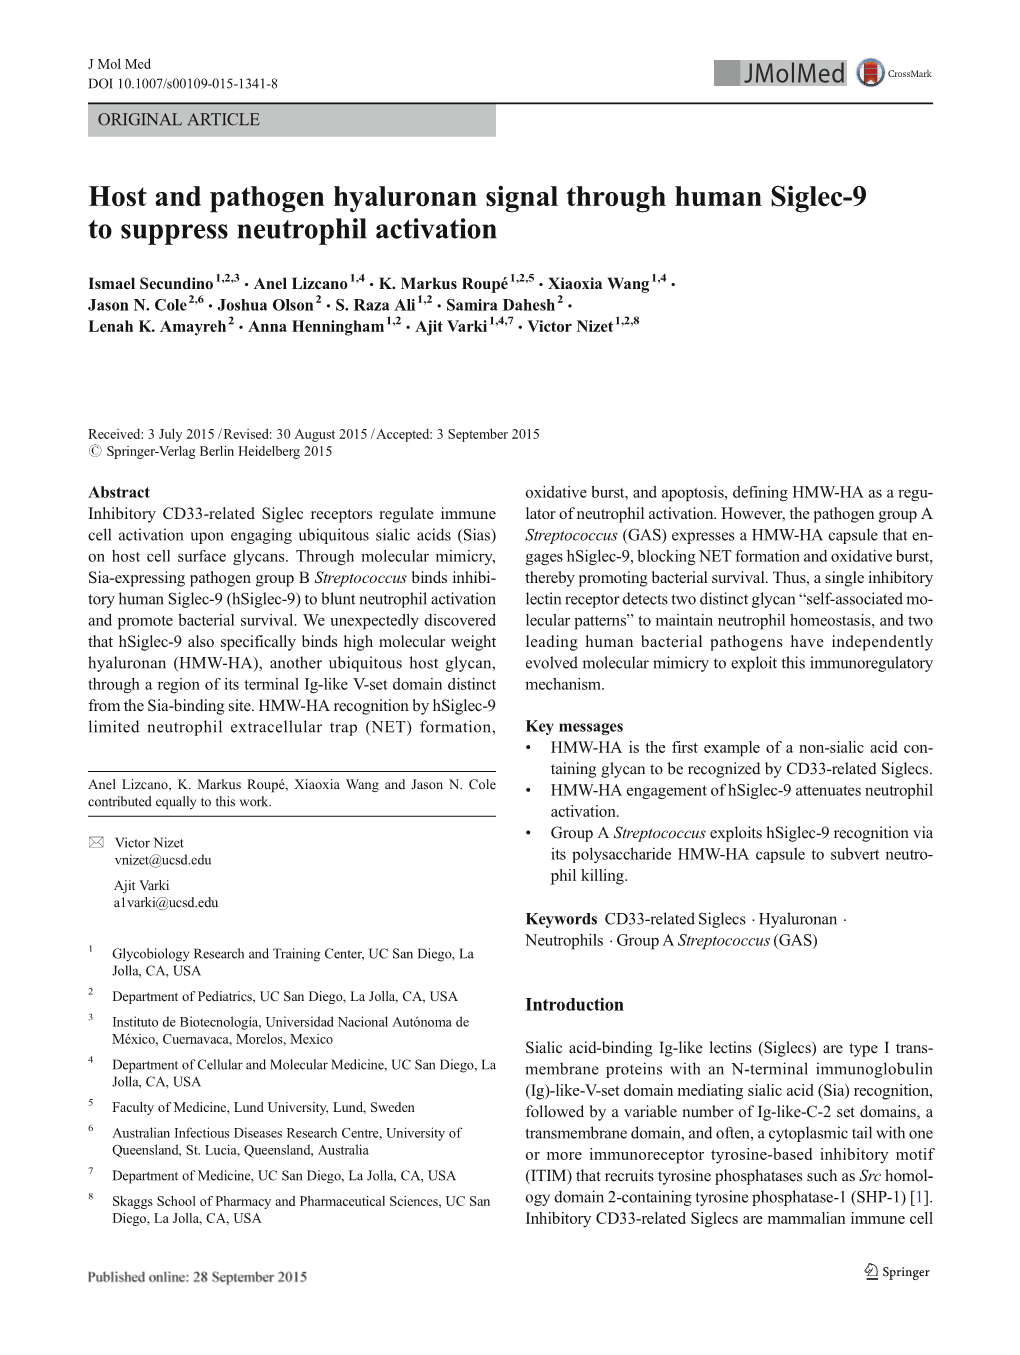 Host and Pathogen Hyaluronan Signal Through Human Siglec-9 to Suppress Neutrophil Activation